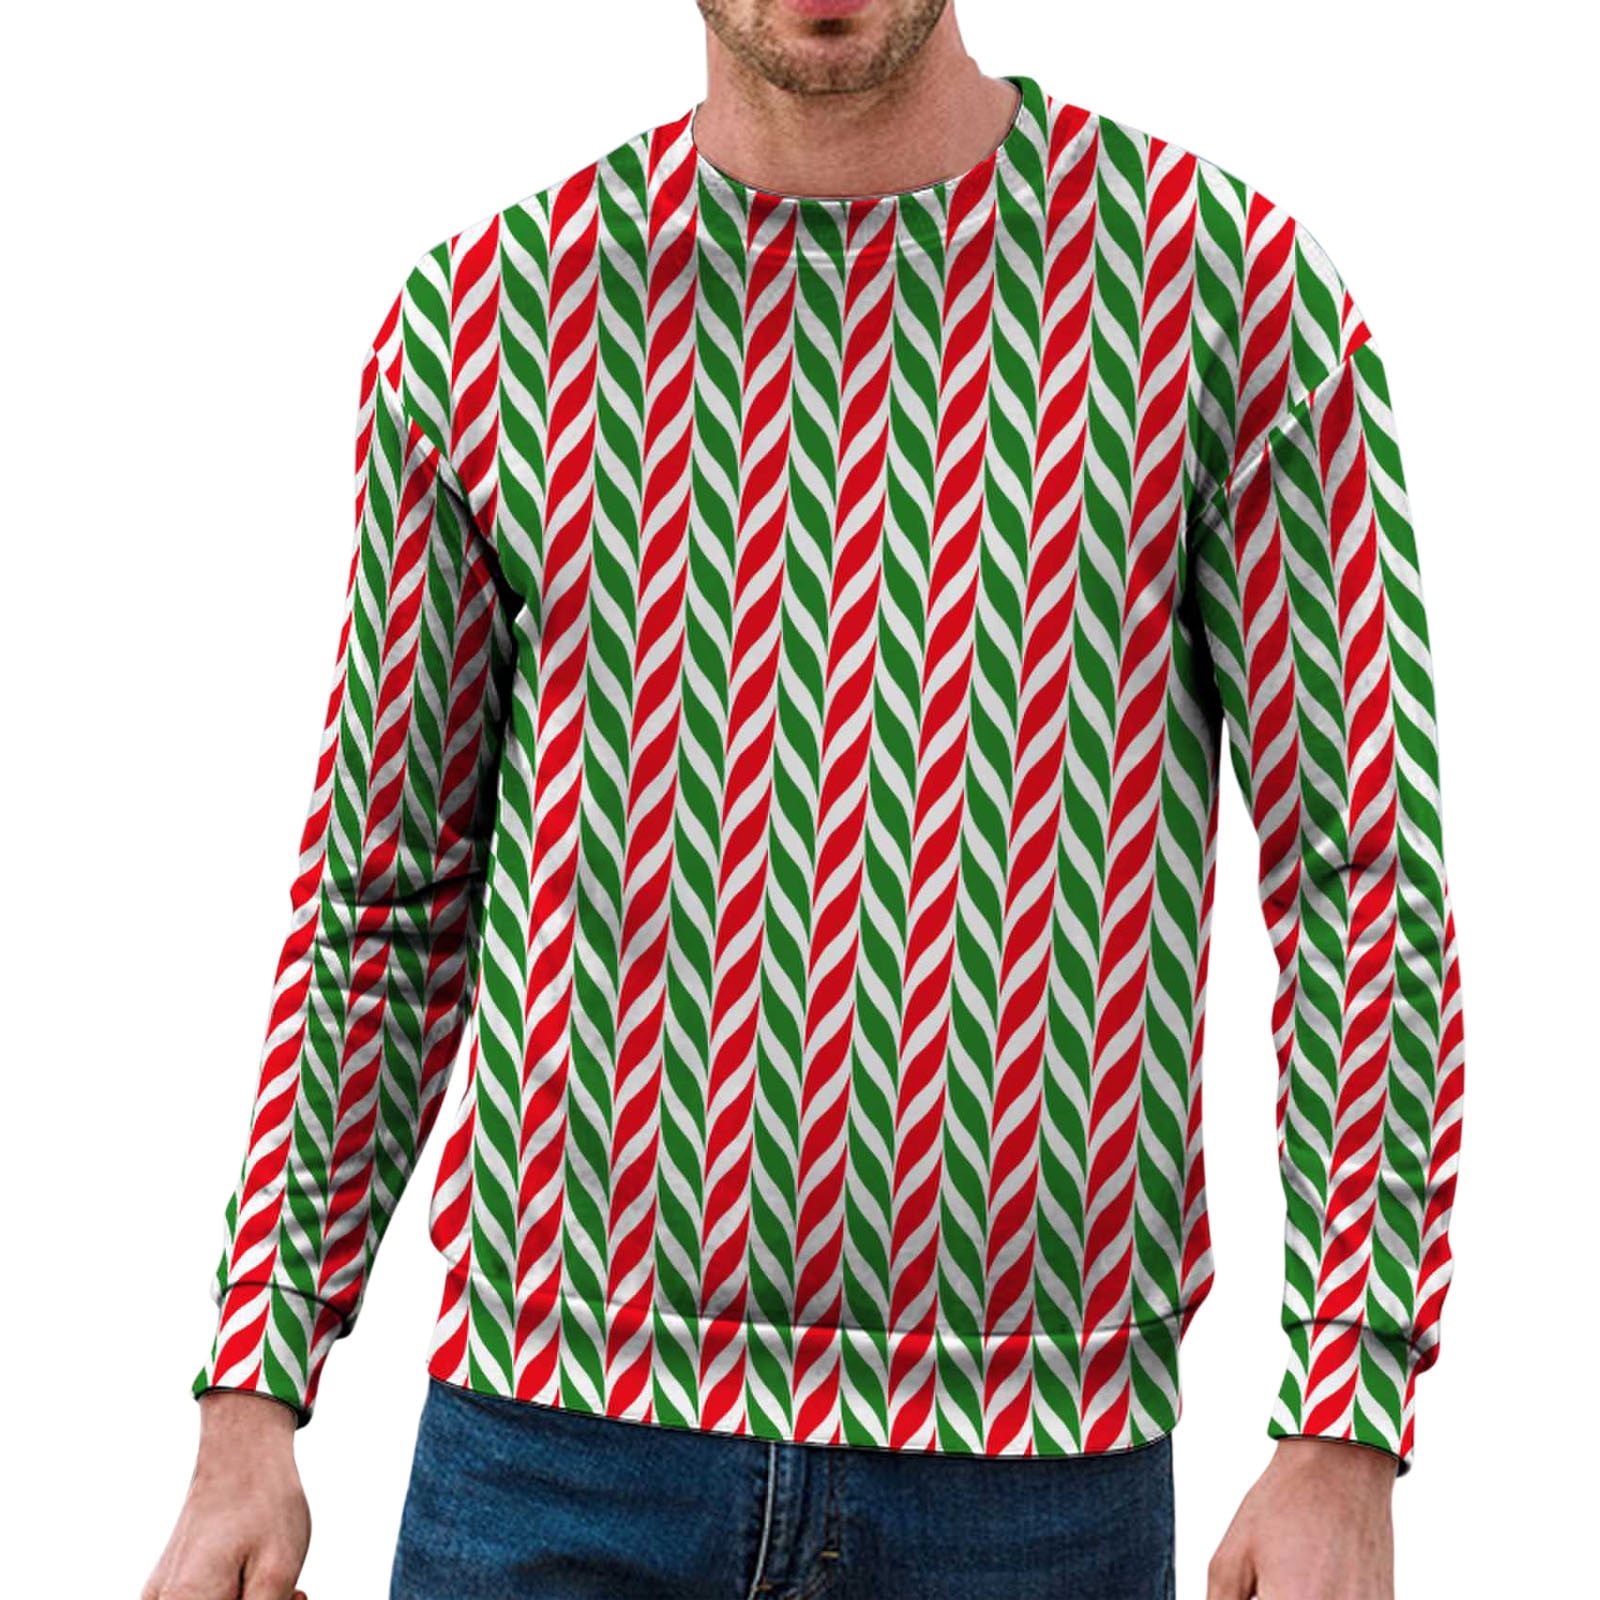 Zuwimk Sweatshirts For Men Crewneck,Men's Relaxed Fit